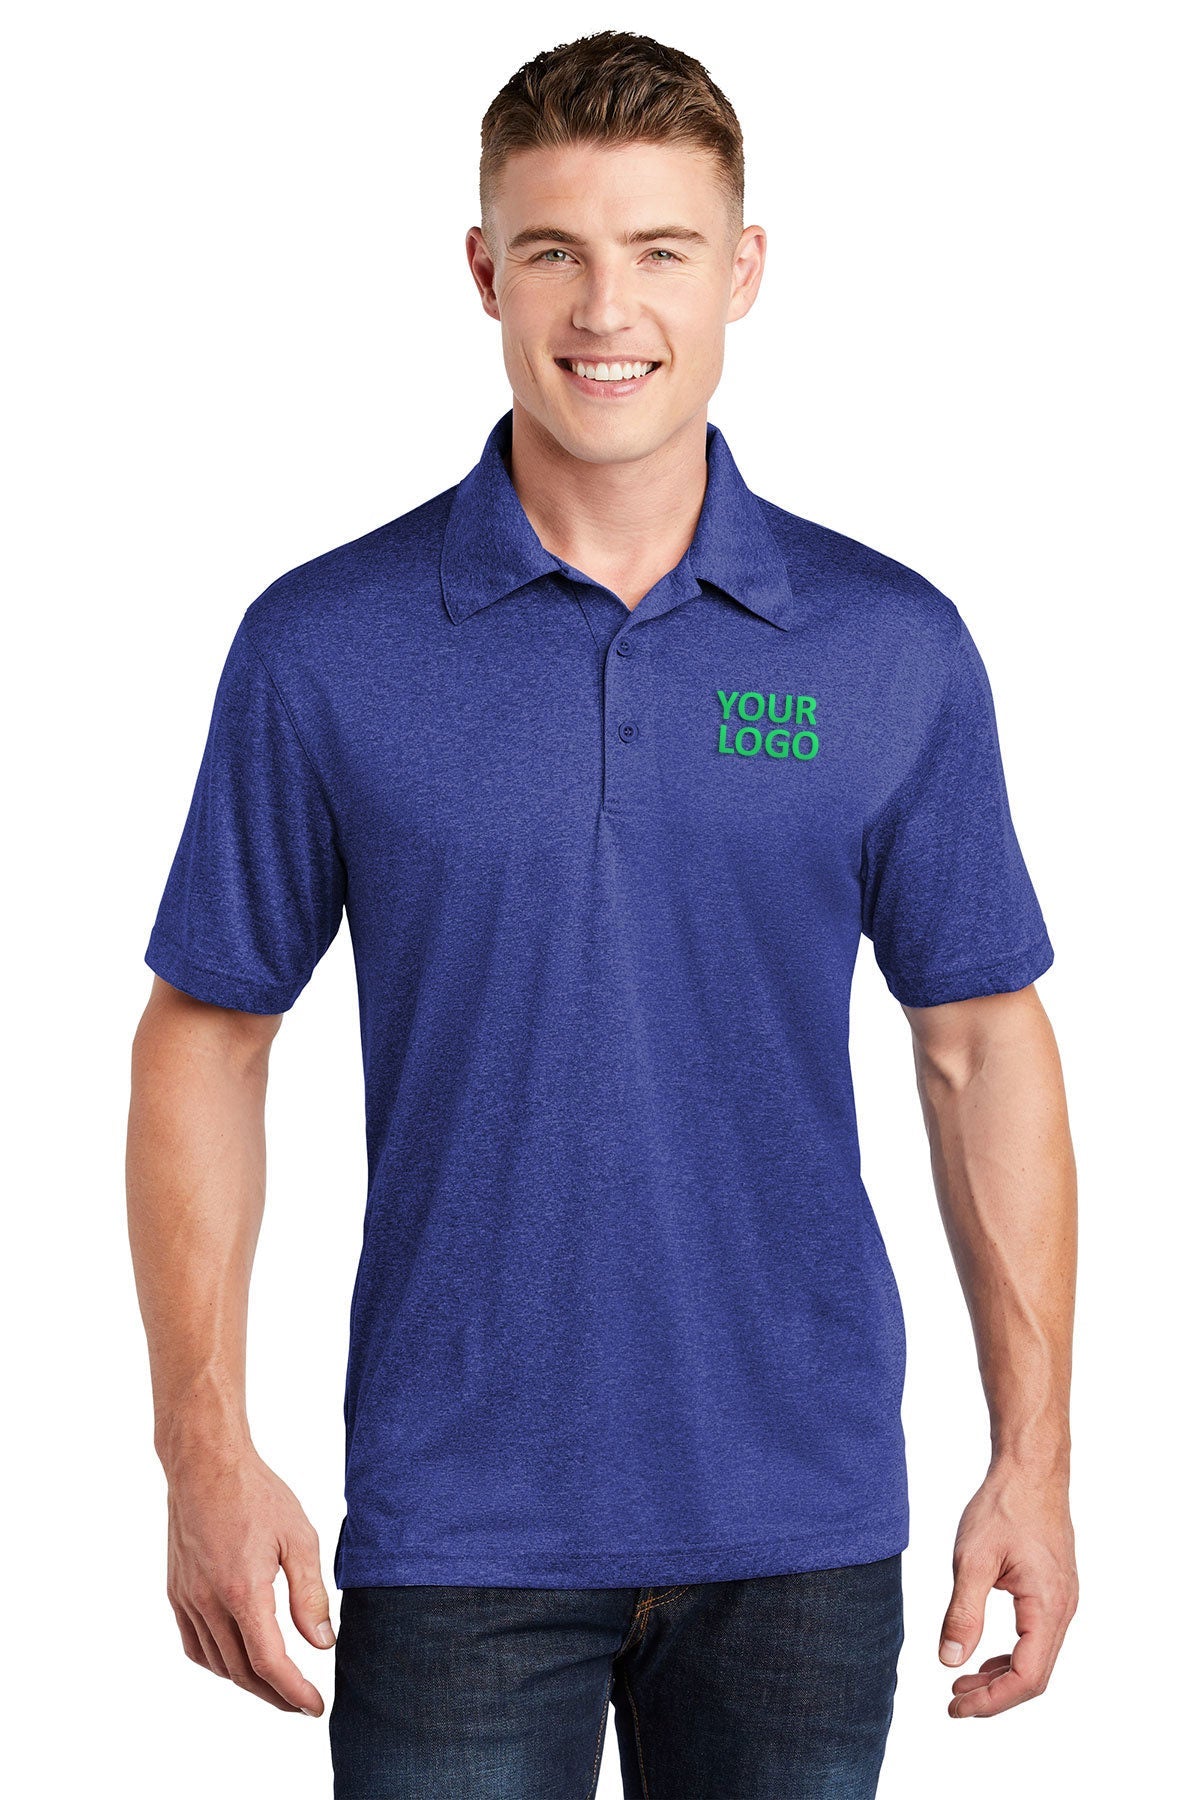 Sport-Tek Cobalt Heather ST660 polo work shirts with company logo